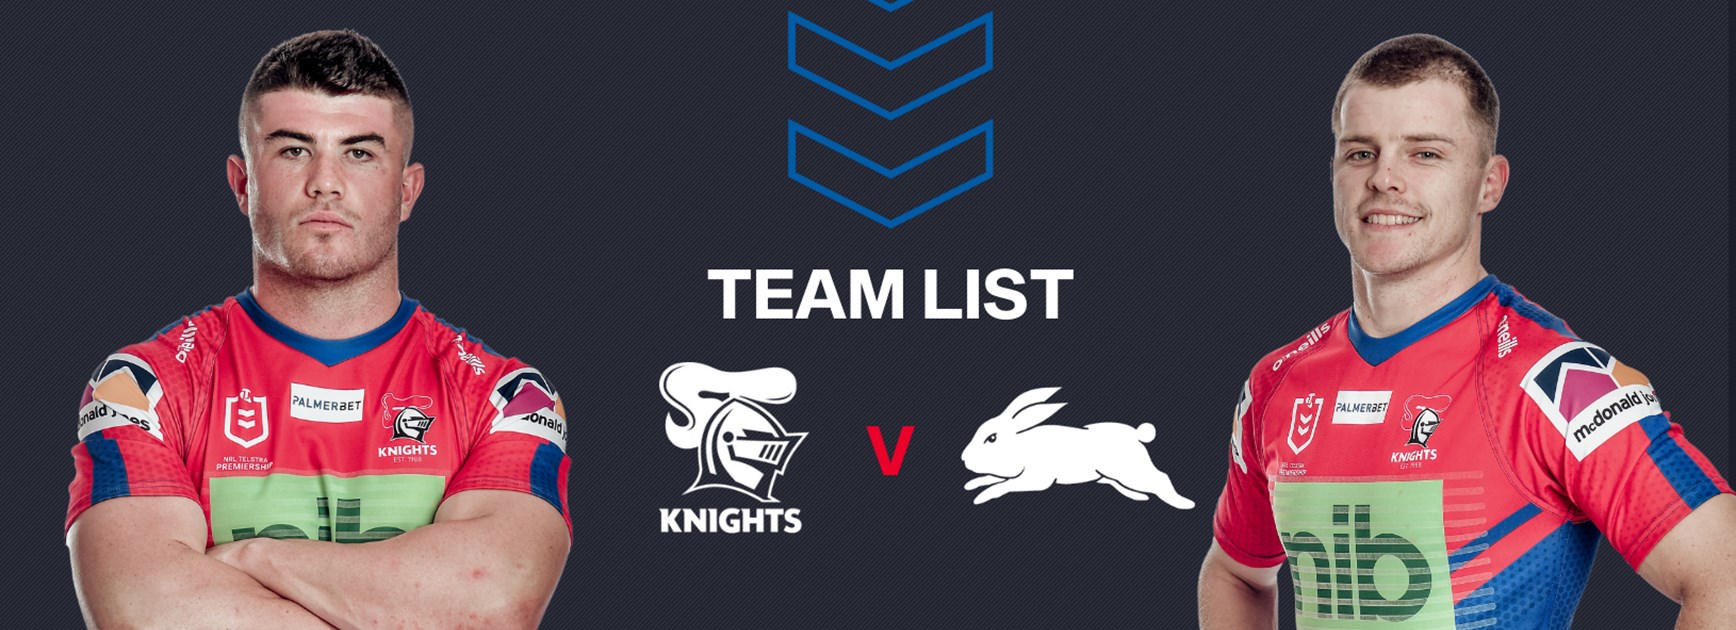 Knights v Rabbitohs Round 17 NRL team list